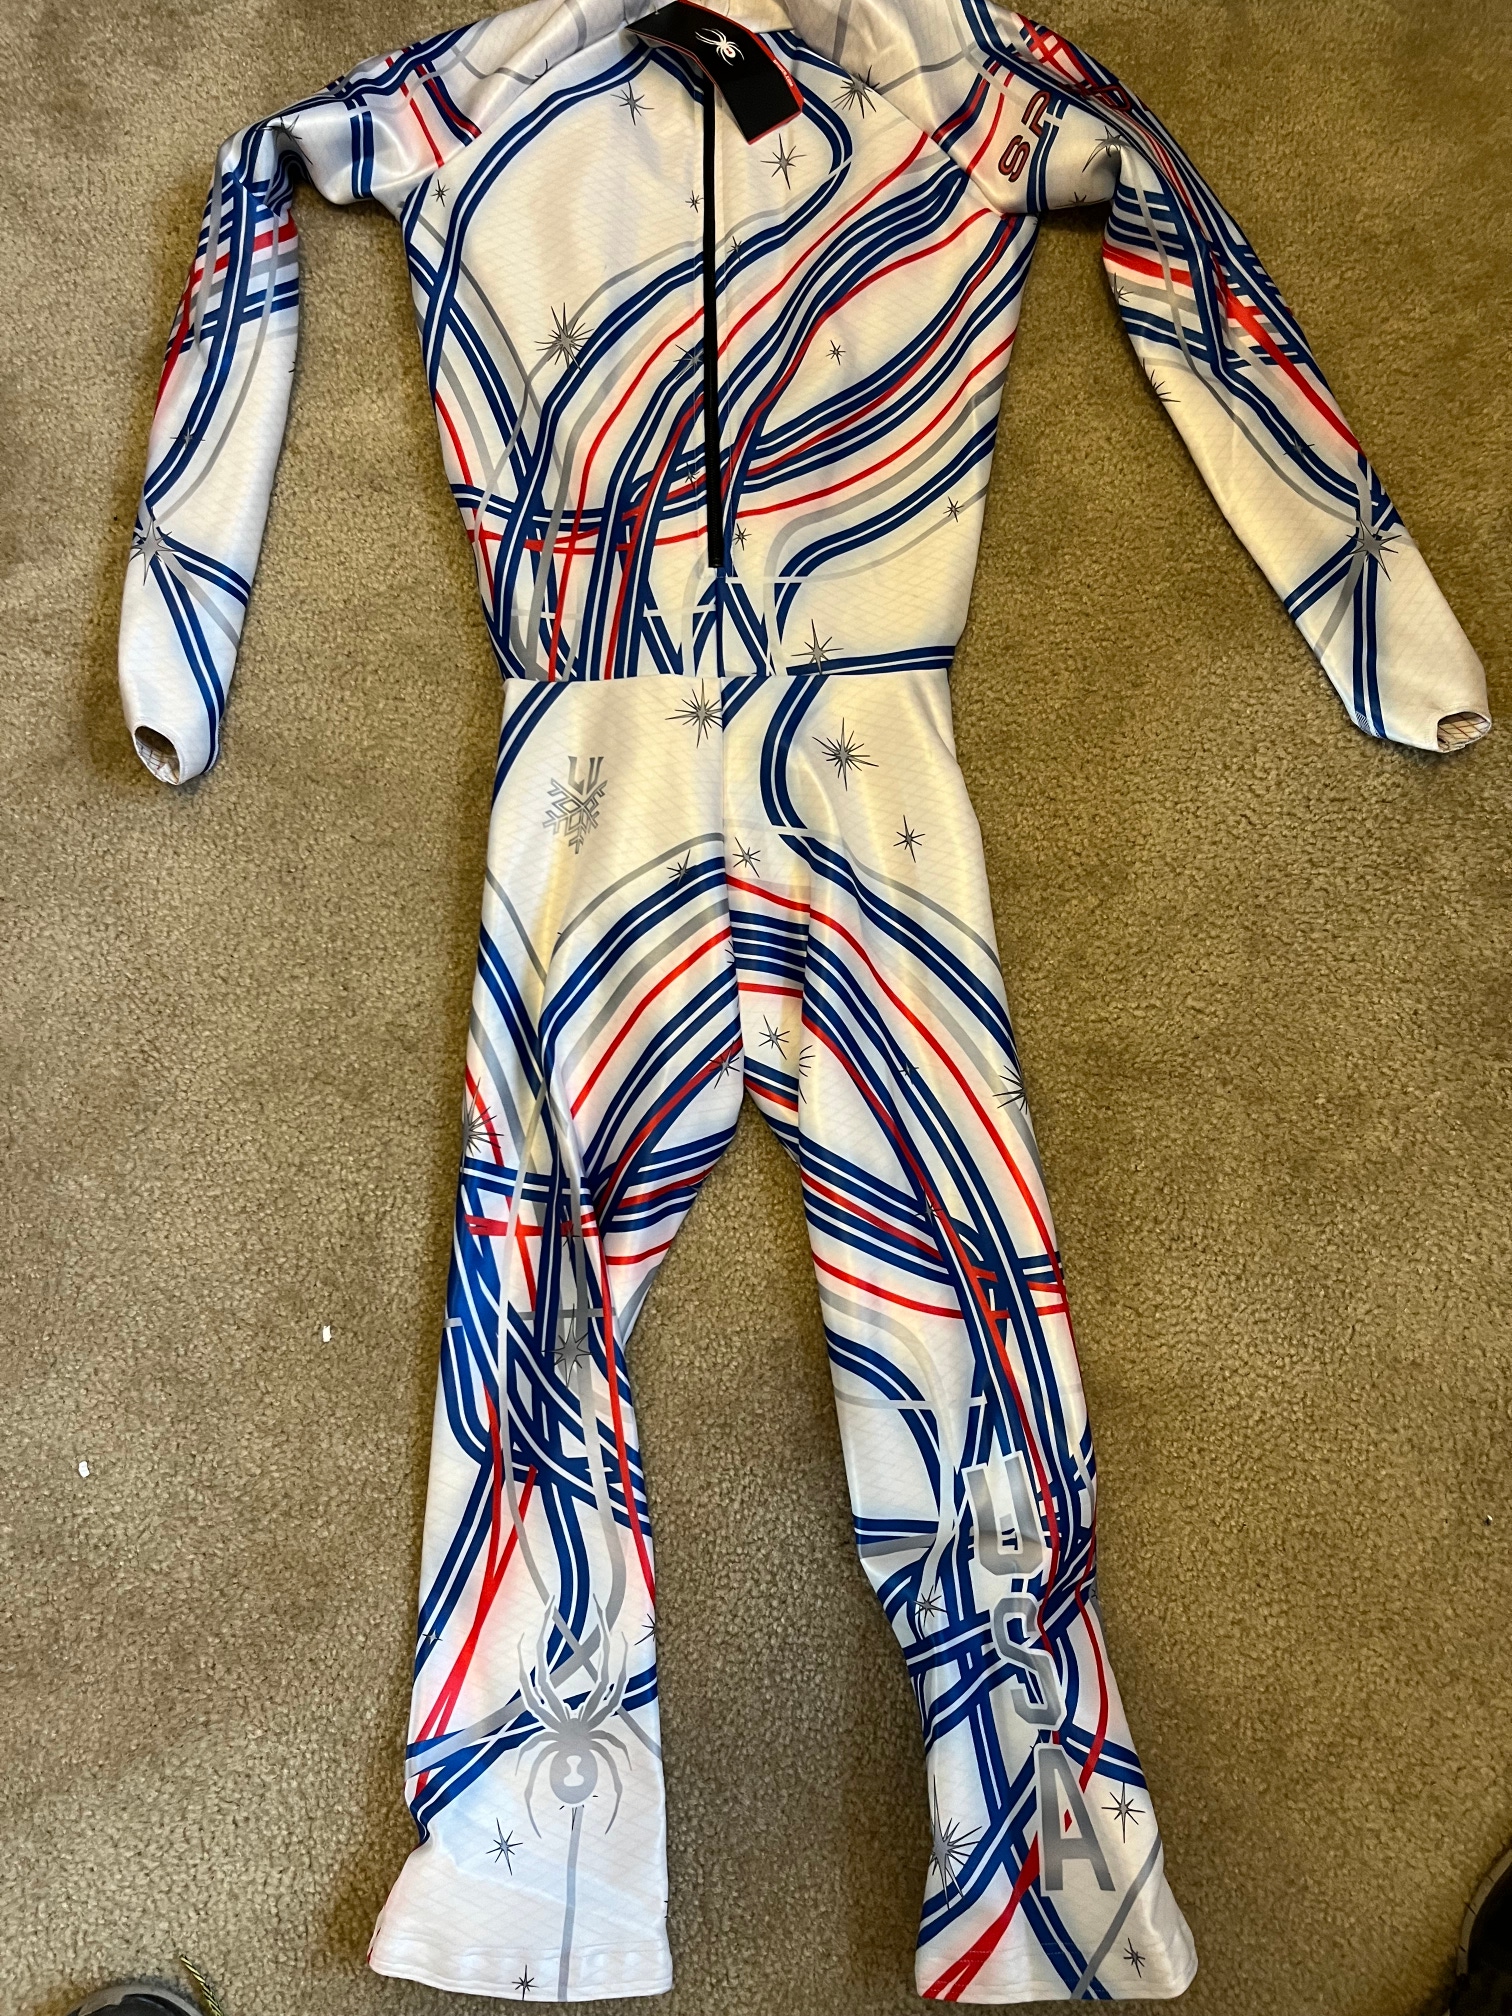 Spyder US Ski Team Lindsay Vonn World Cup Downhill Race Suit Unpadded Extra Large